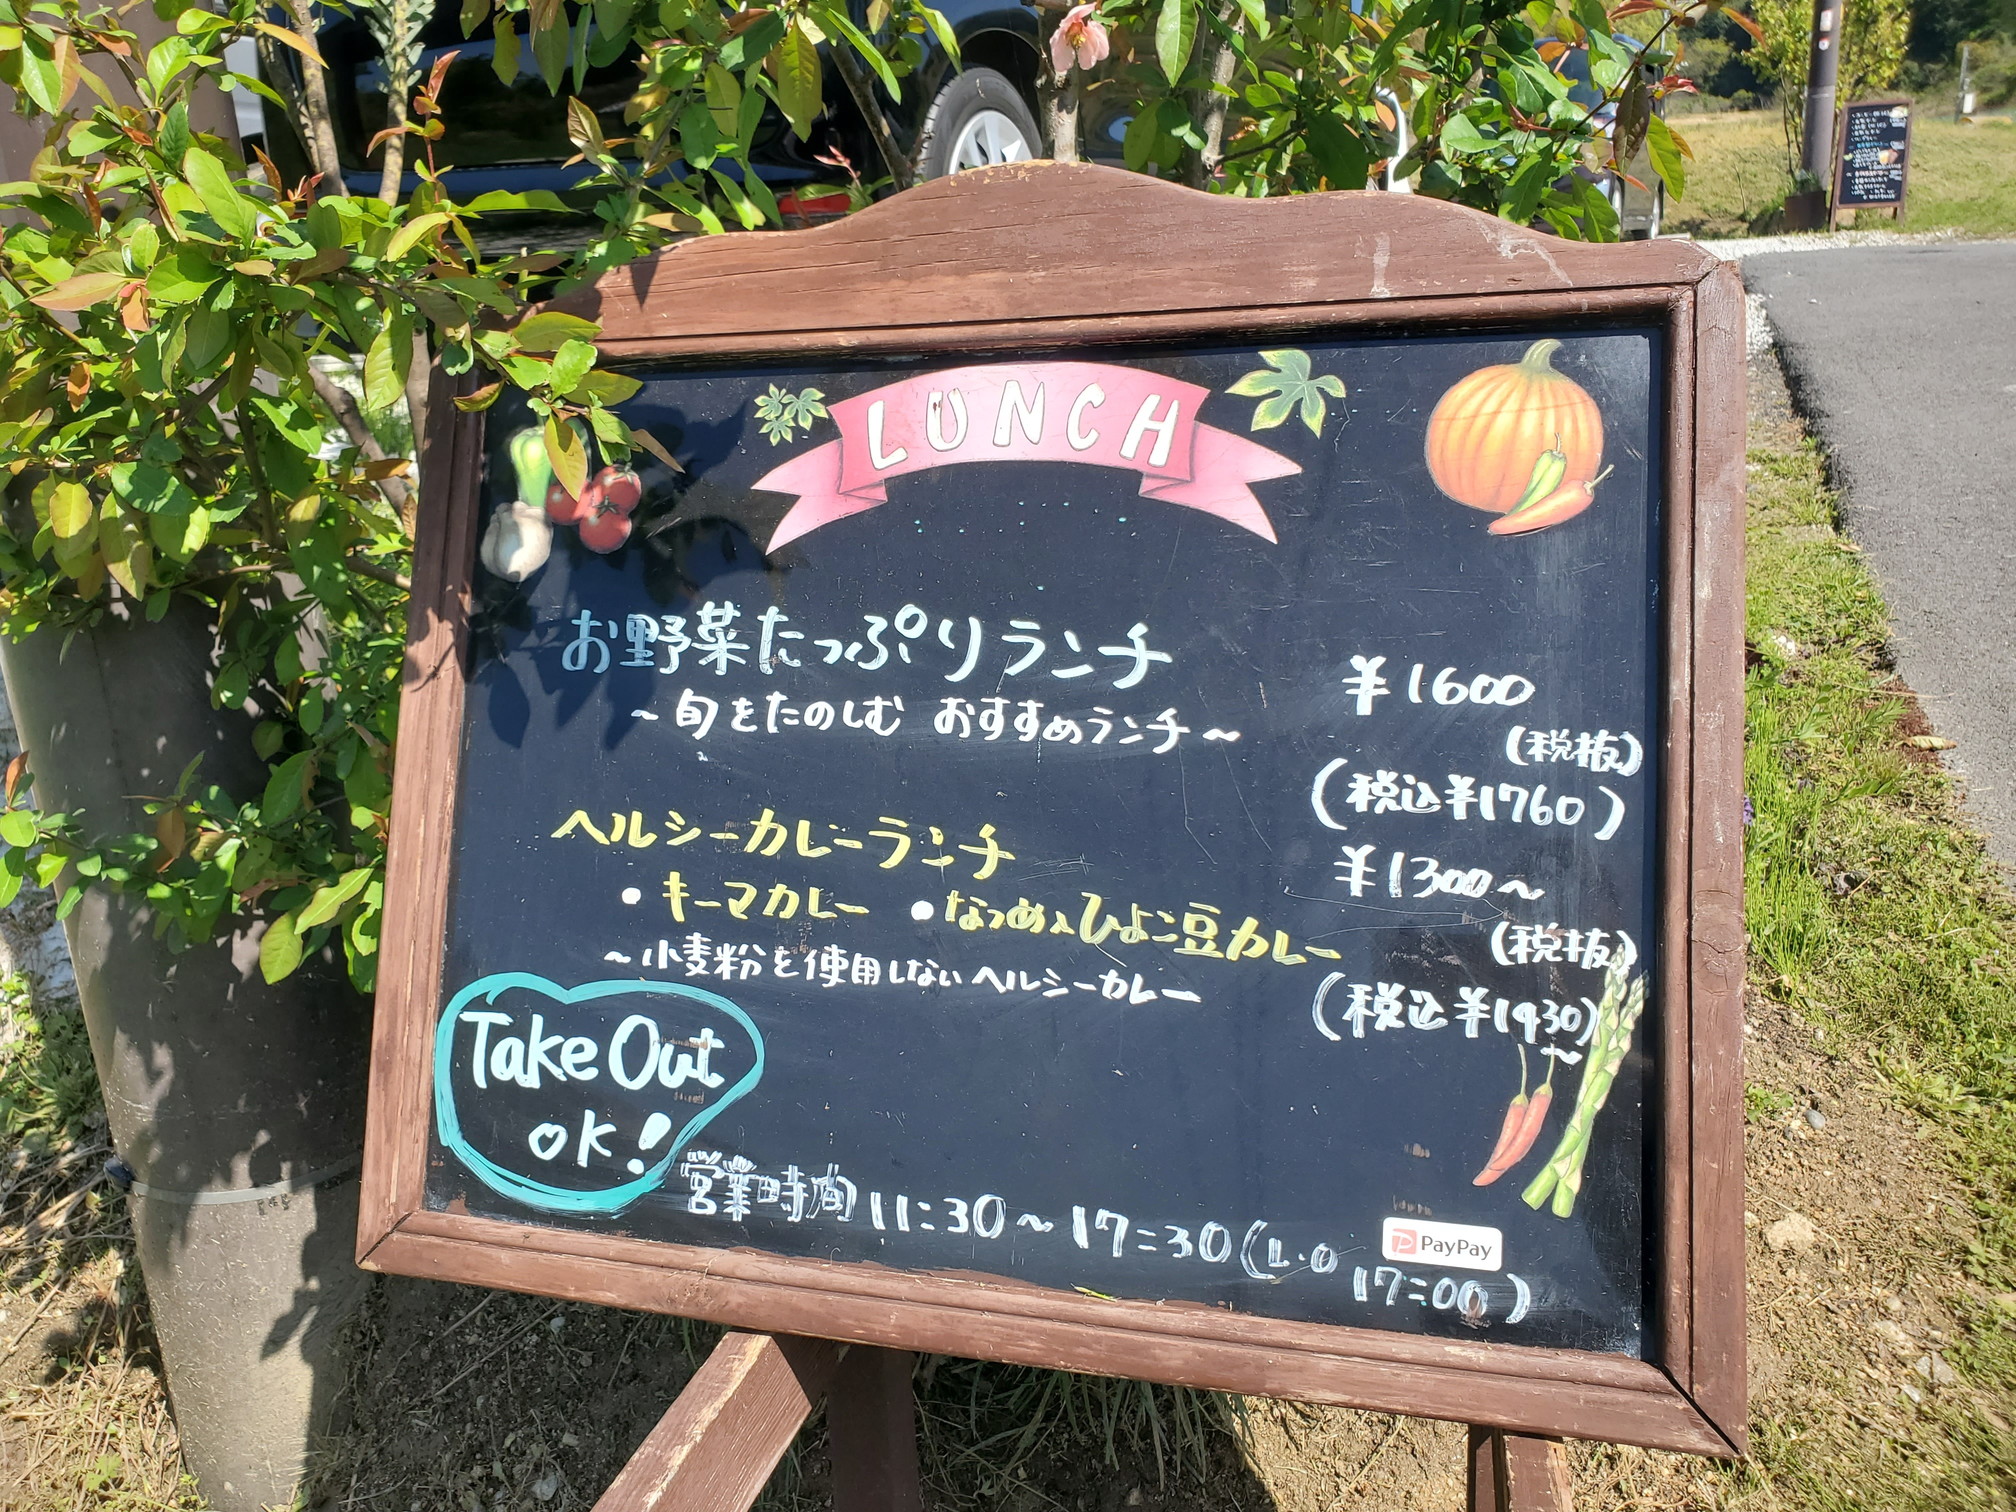 Cafe samanala garden(カフェ サマナラガーデン)